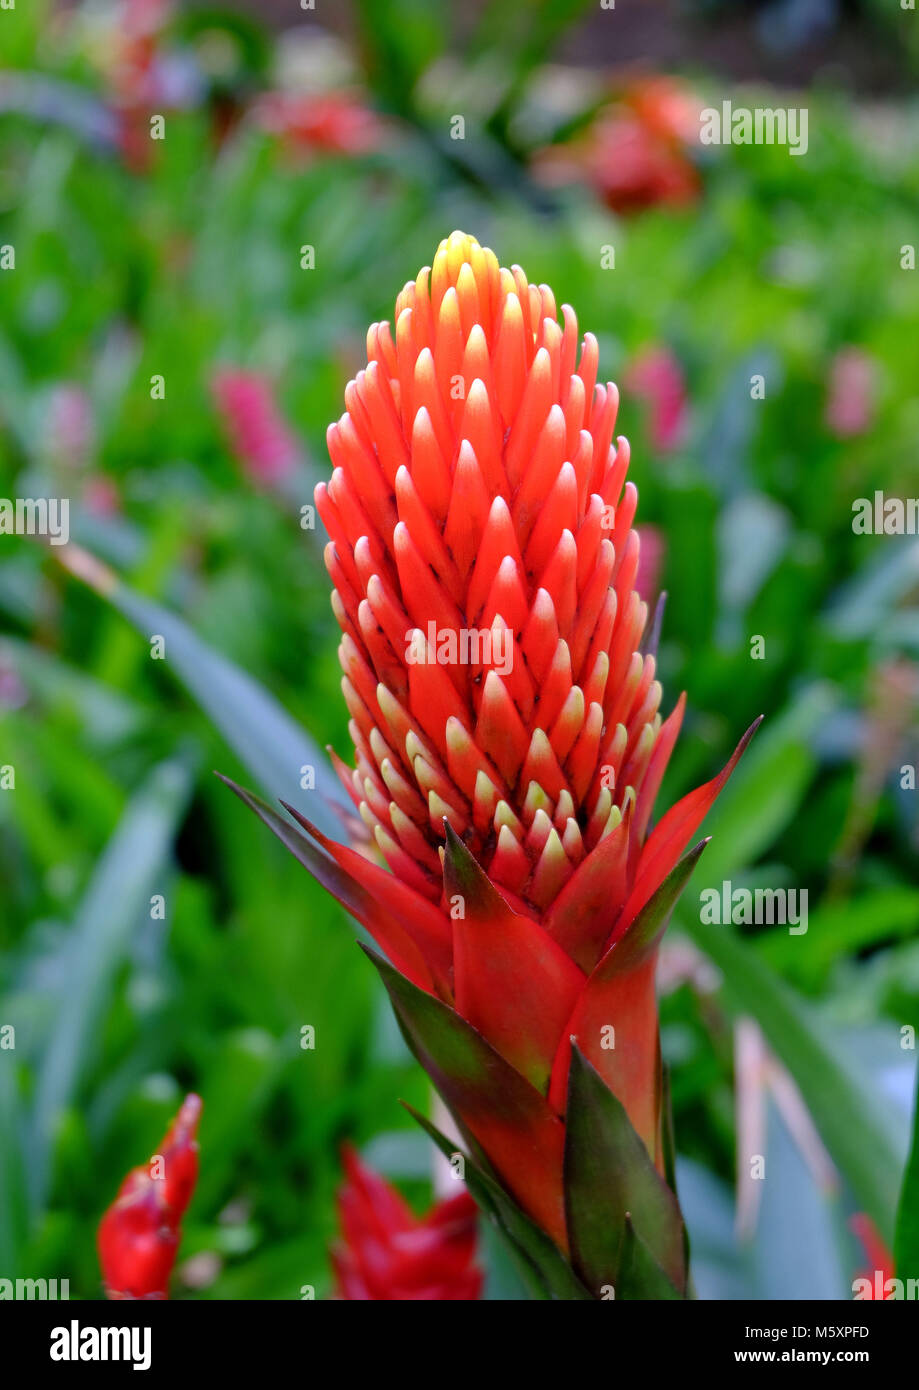 Guzmania Conifera. Guzmani is a species of flowering plants in the family Bromeliaceae. Stock Photo